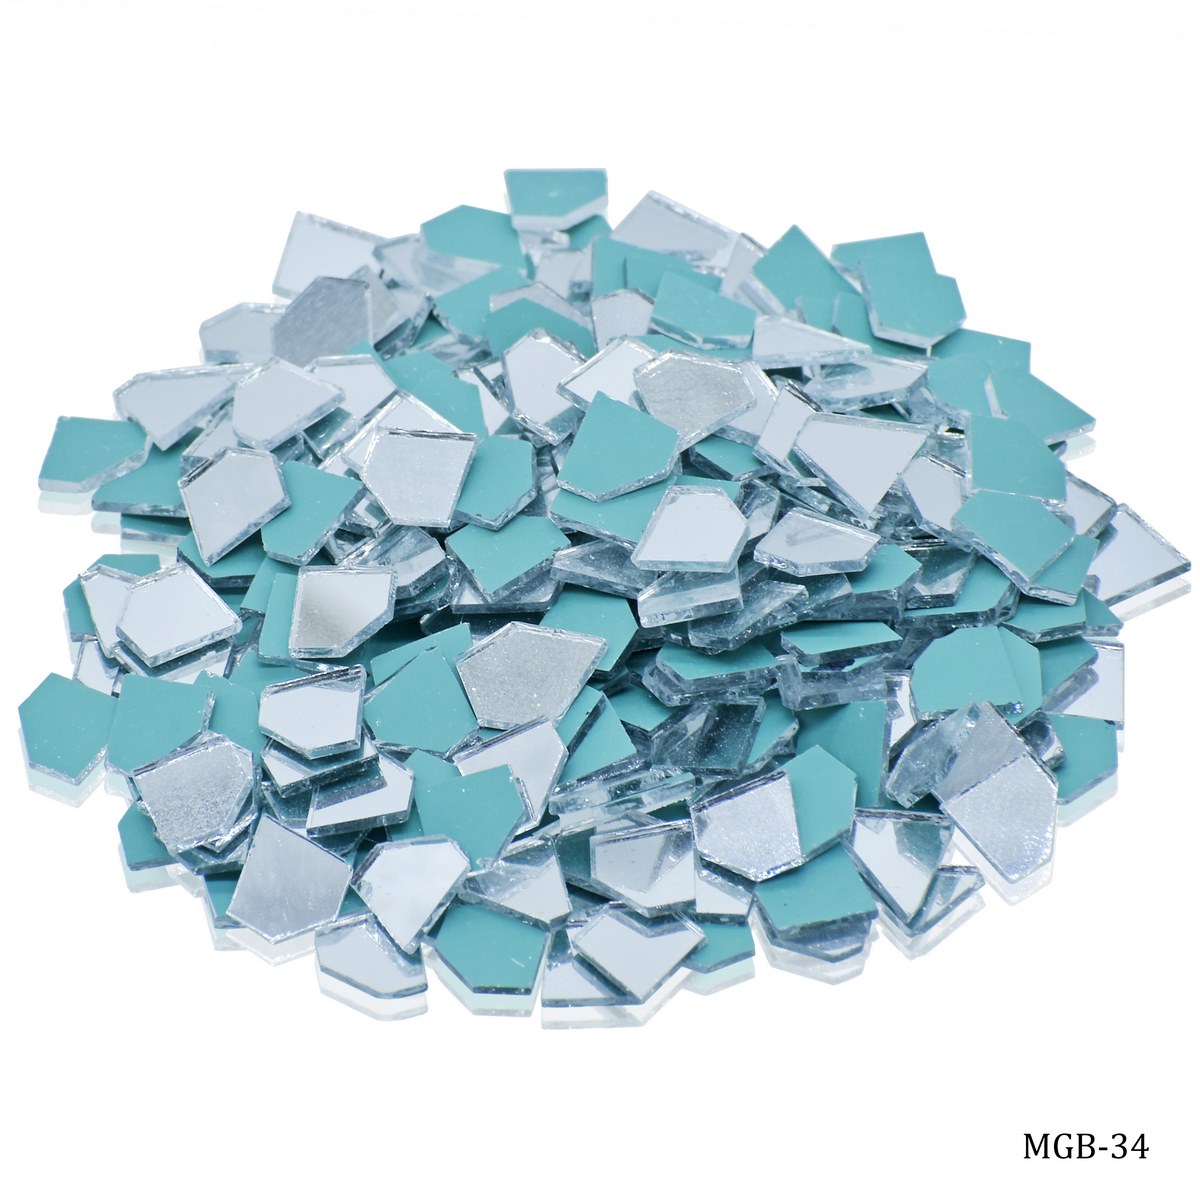 jags-mumbai Lippan Mirror For Lippan Art 50G Diamond Shape Small 34 No